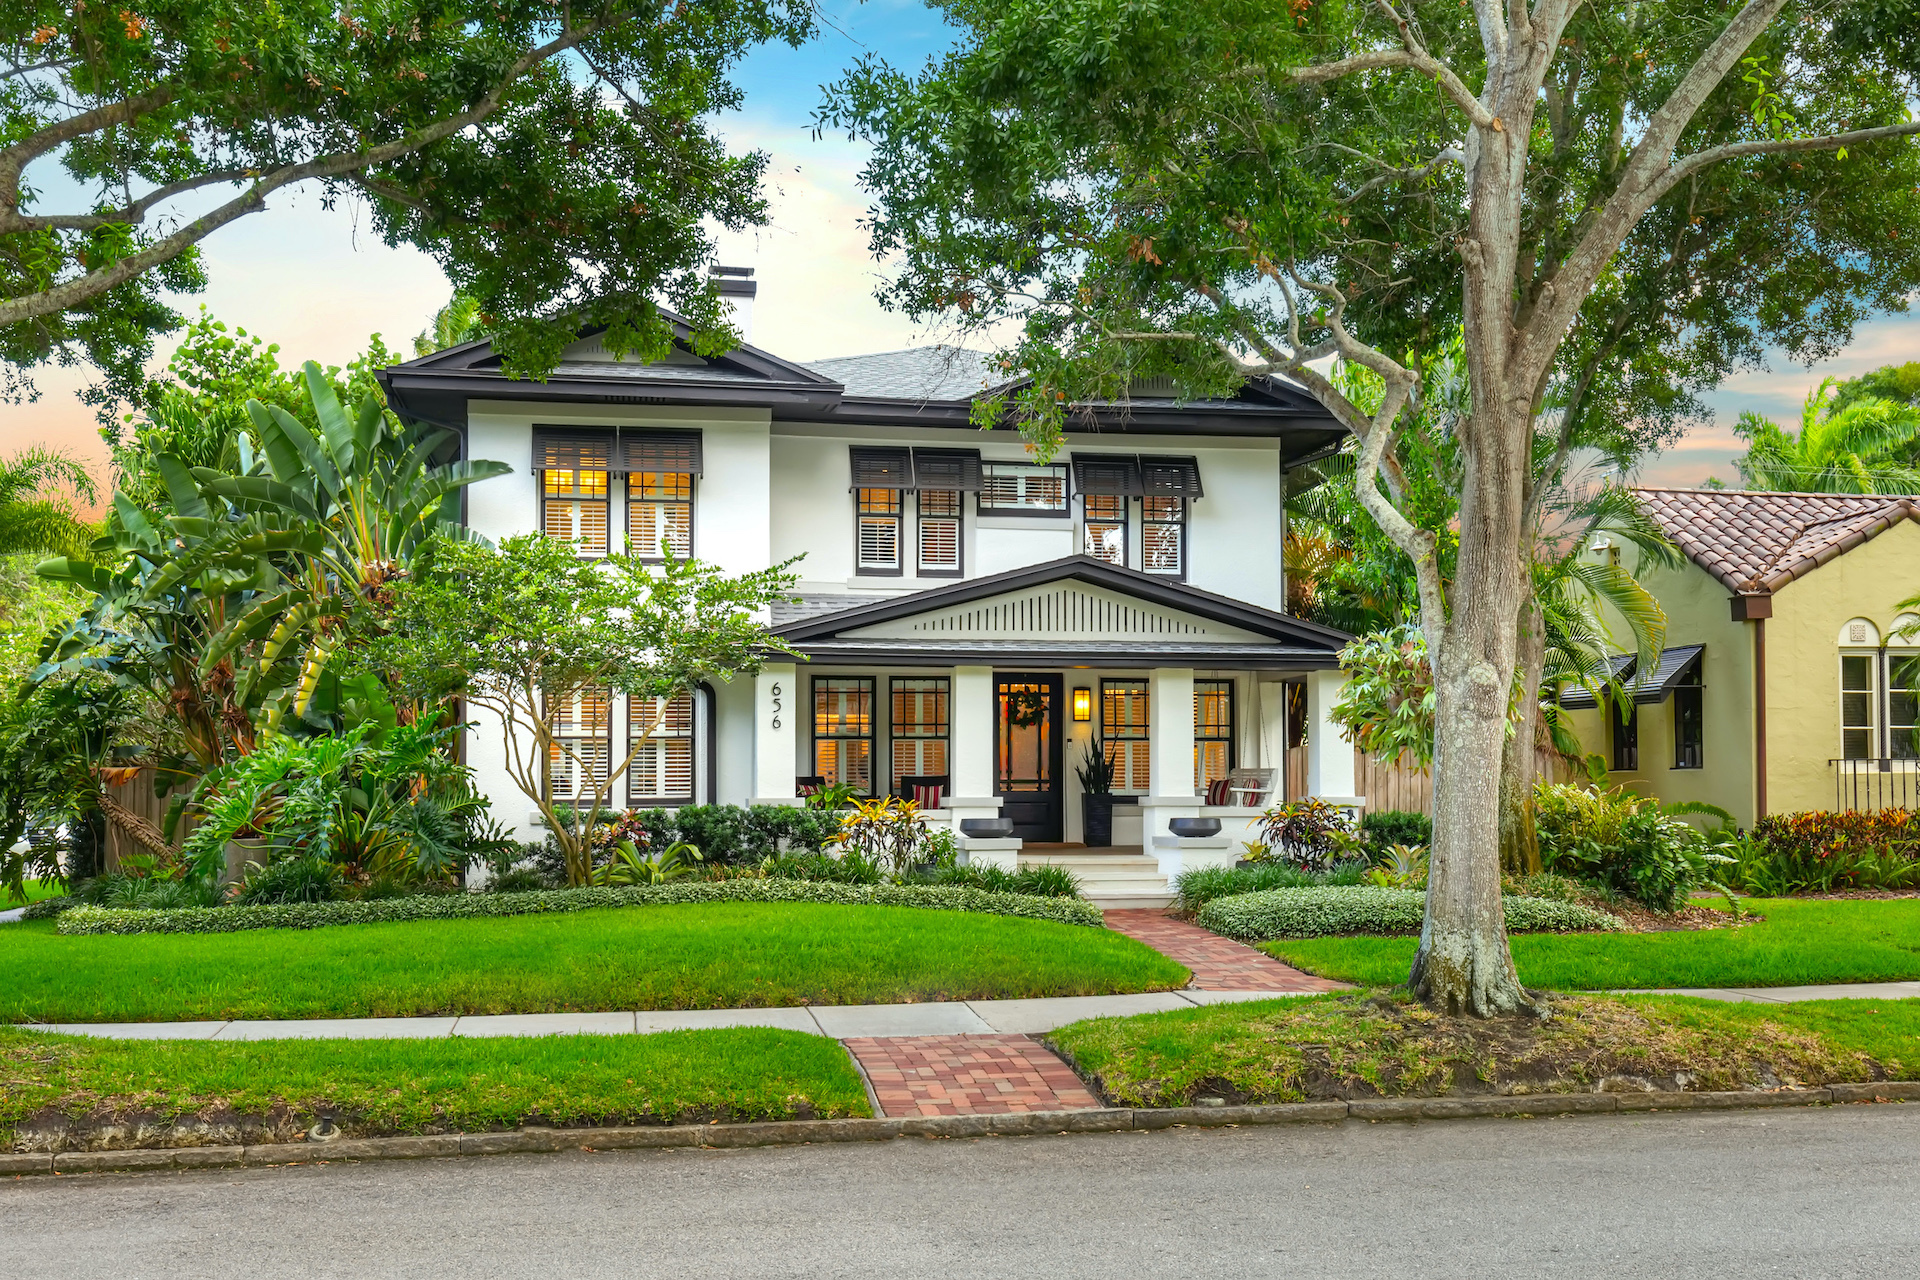 Larry Mendez | Smith & Associates Real Estate | REALTOR | Home